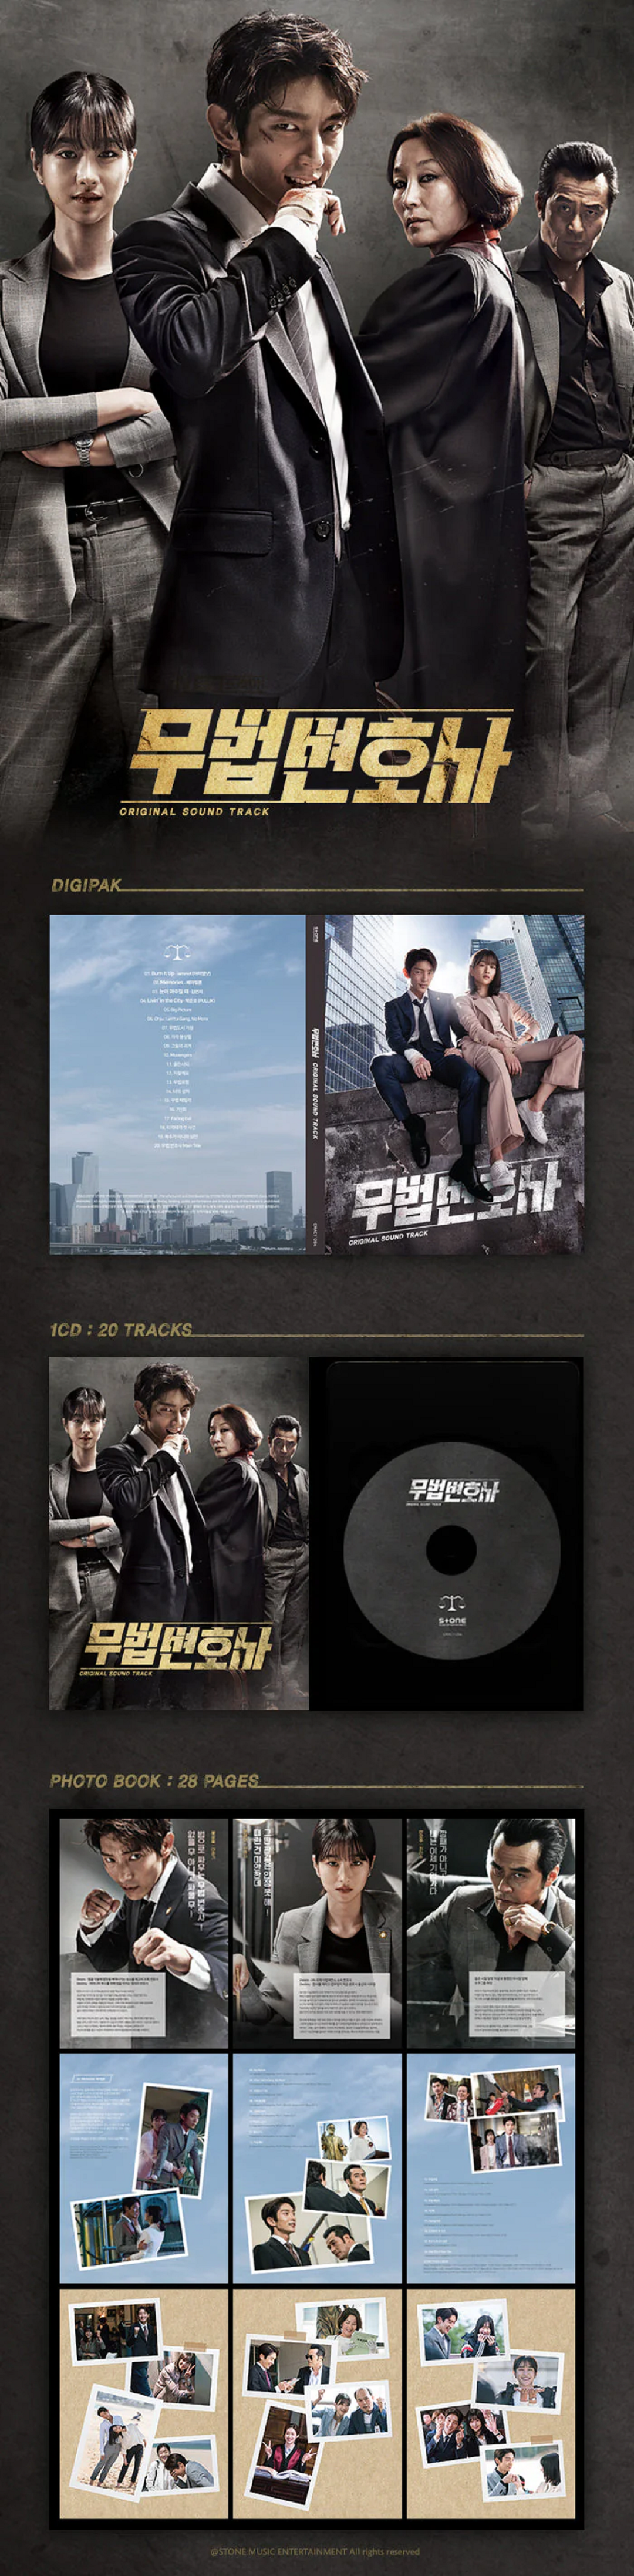 Lawless Lawyer / 무법 변호사] tvN Drama OST